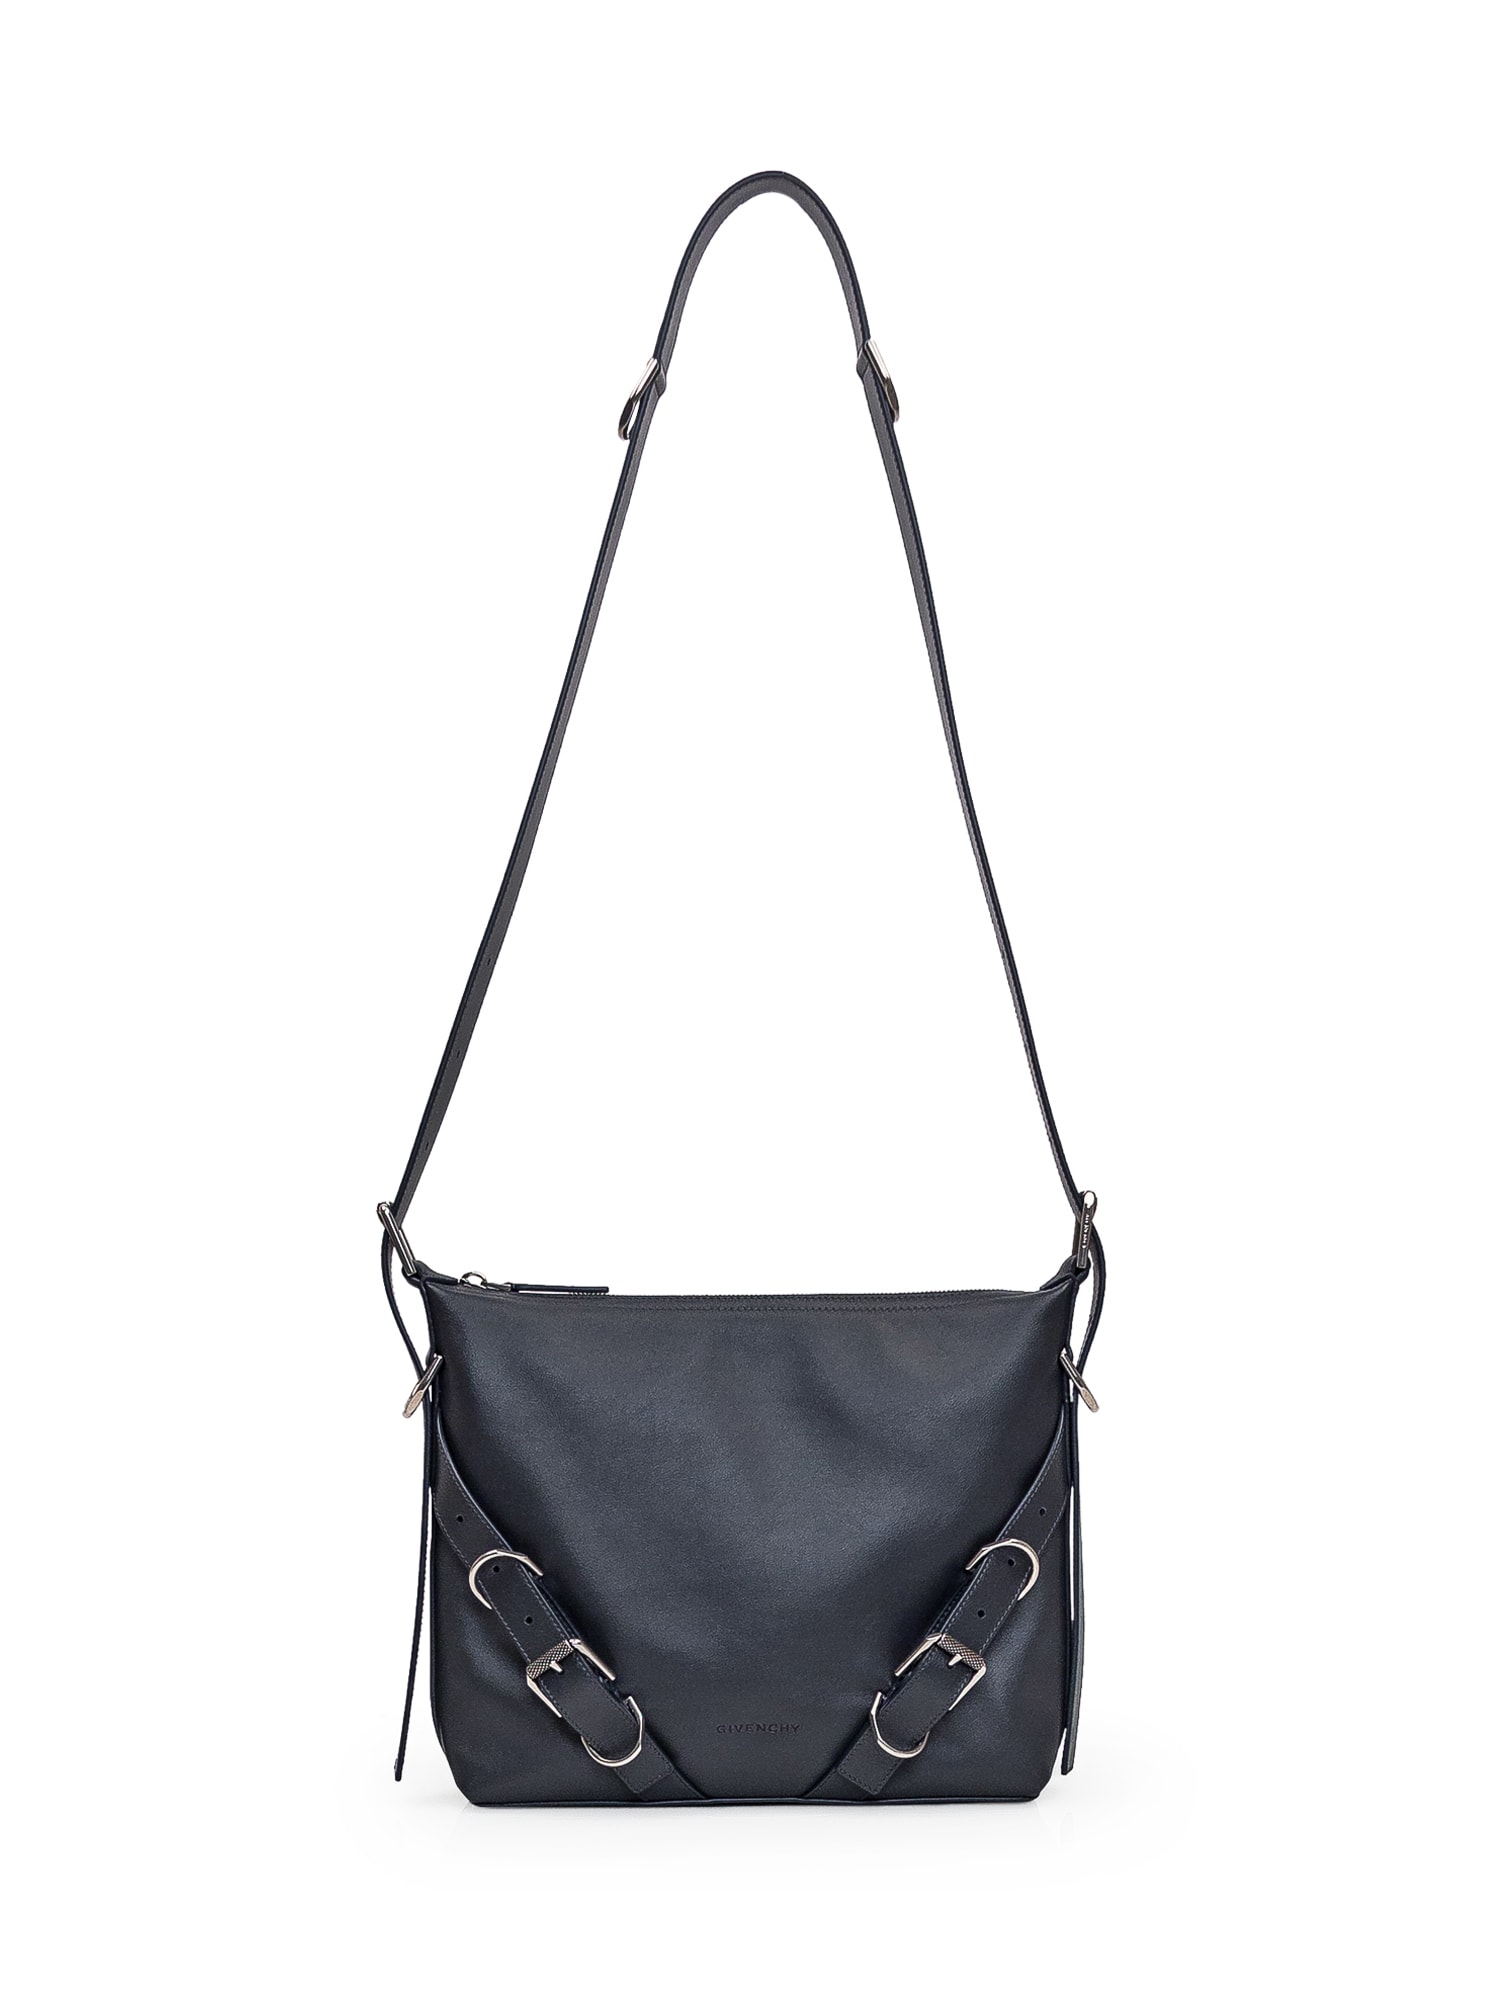 Givenchy Voyou Bag In Dark Grey